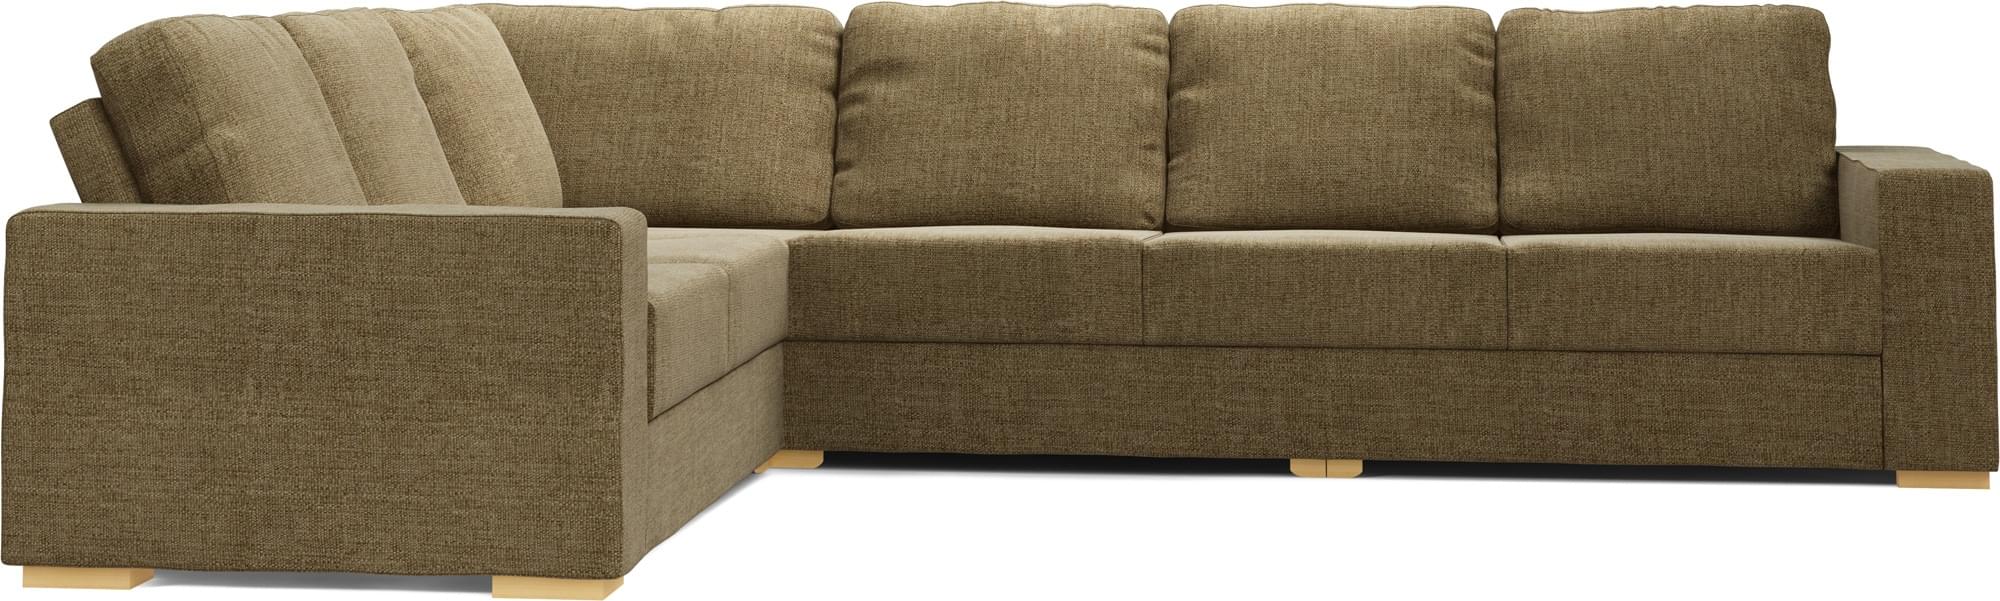 Sker 4X3 Corner Sofa